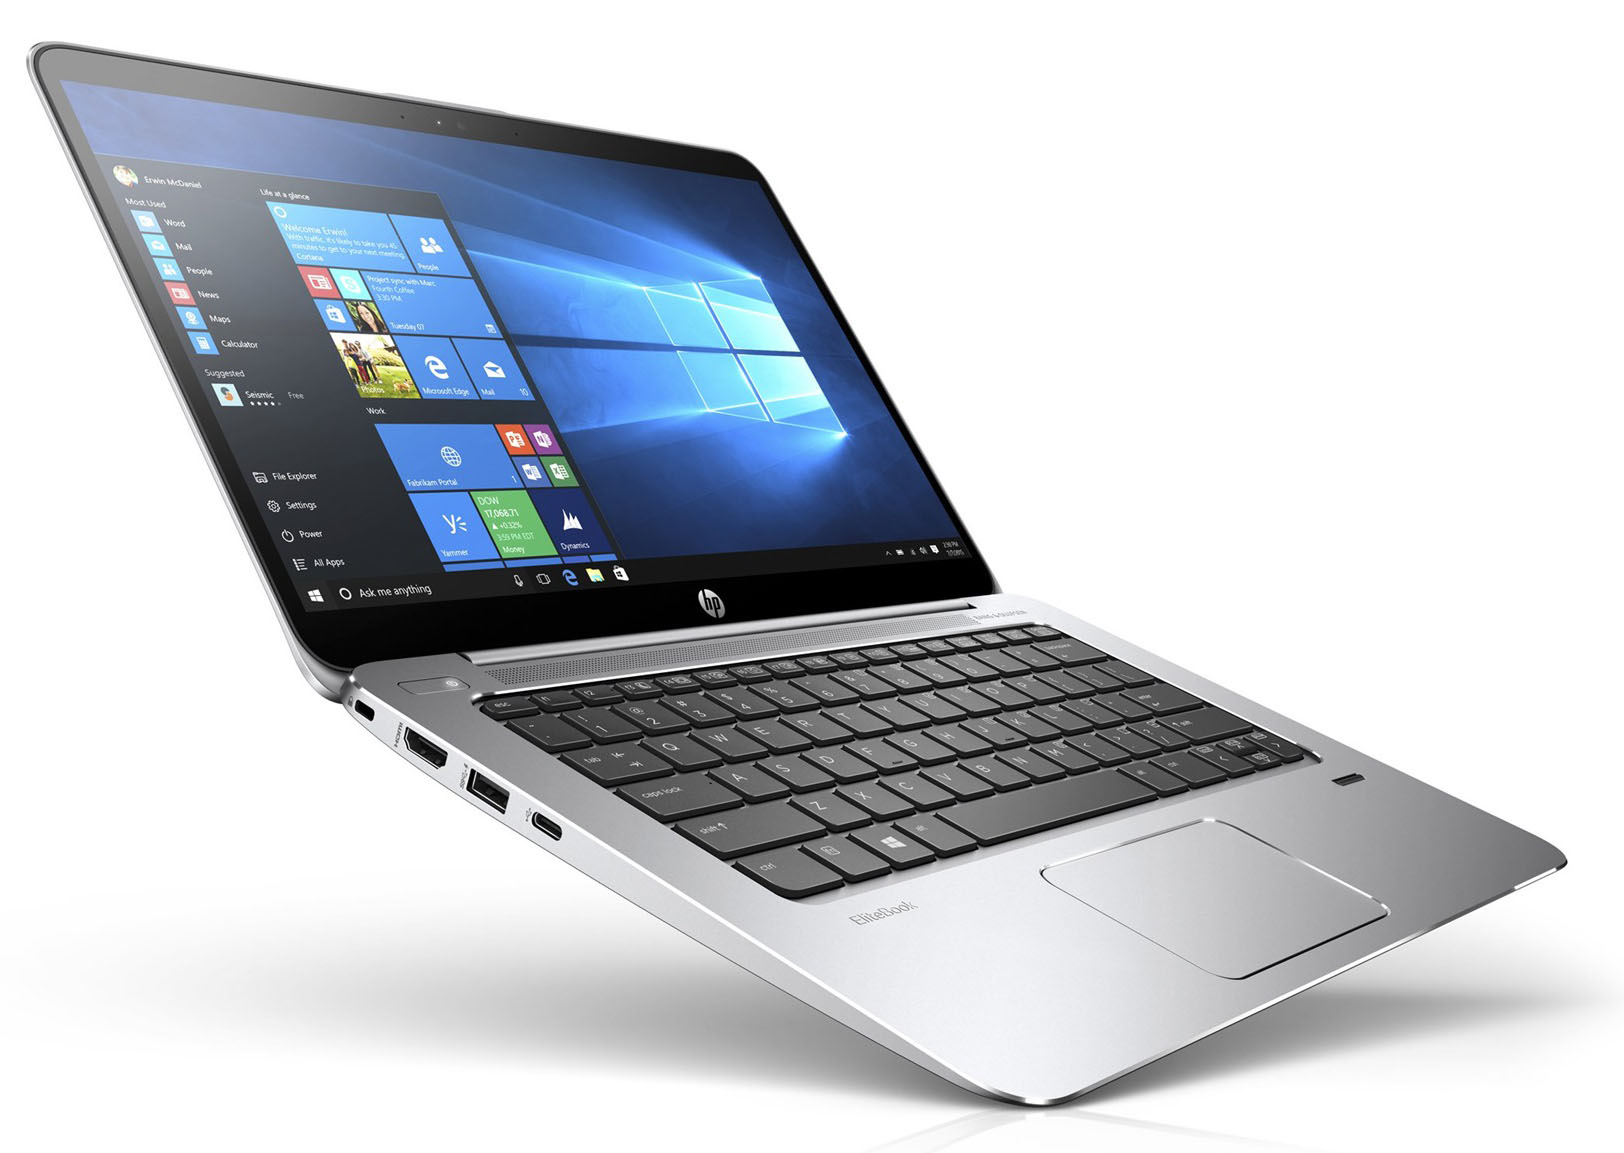 HP EliteBook 1030 G1 - Specs, Tests, and Prices | LaptopMedia.com